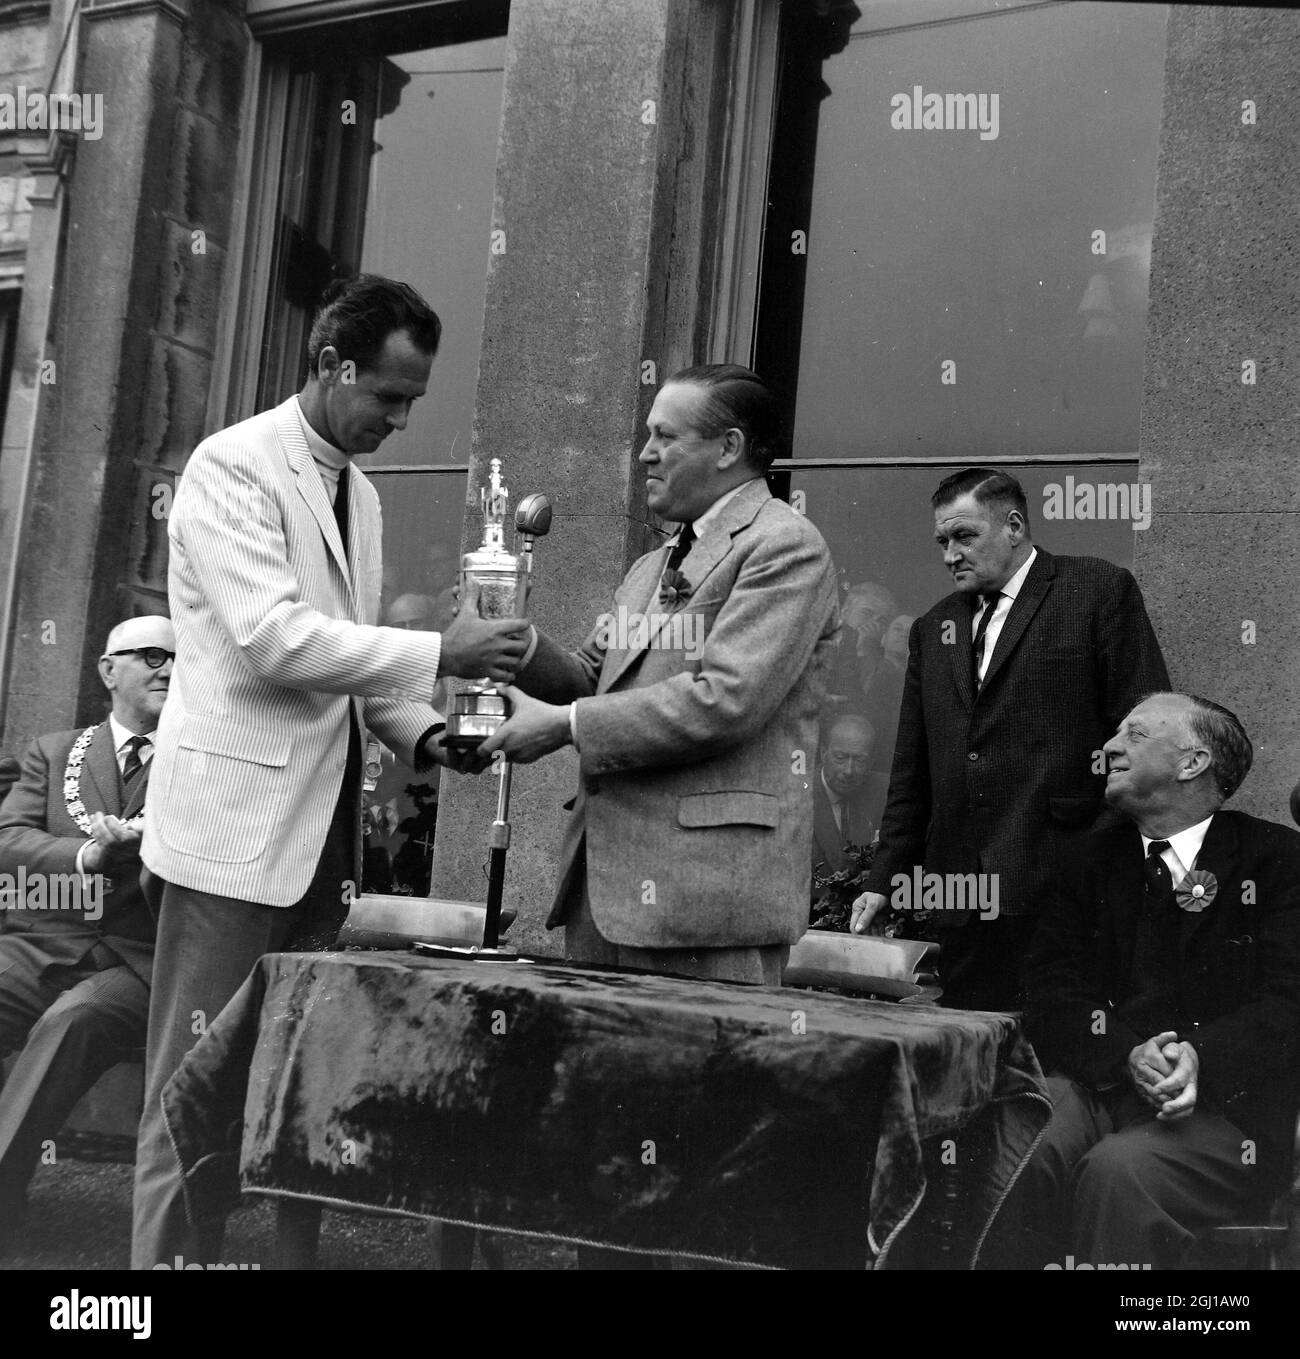 GOLFER TONY LEMA GEWINNT OPEN GOLF CHAMPIONSHIP IN ST ANDREWS, SCHOTTLAND - ; 11. JULI 1964 Stockfoto